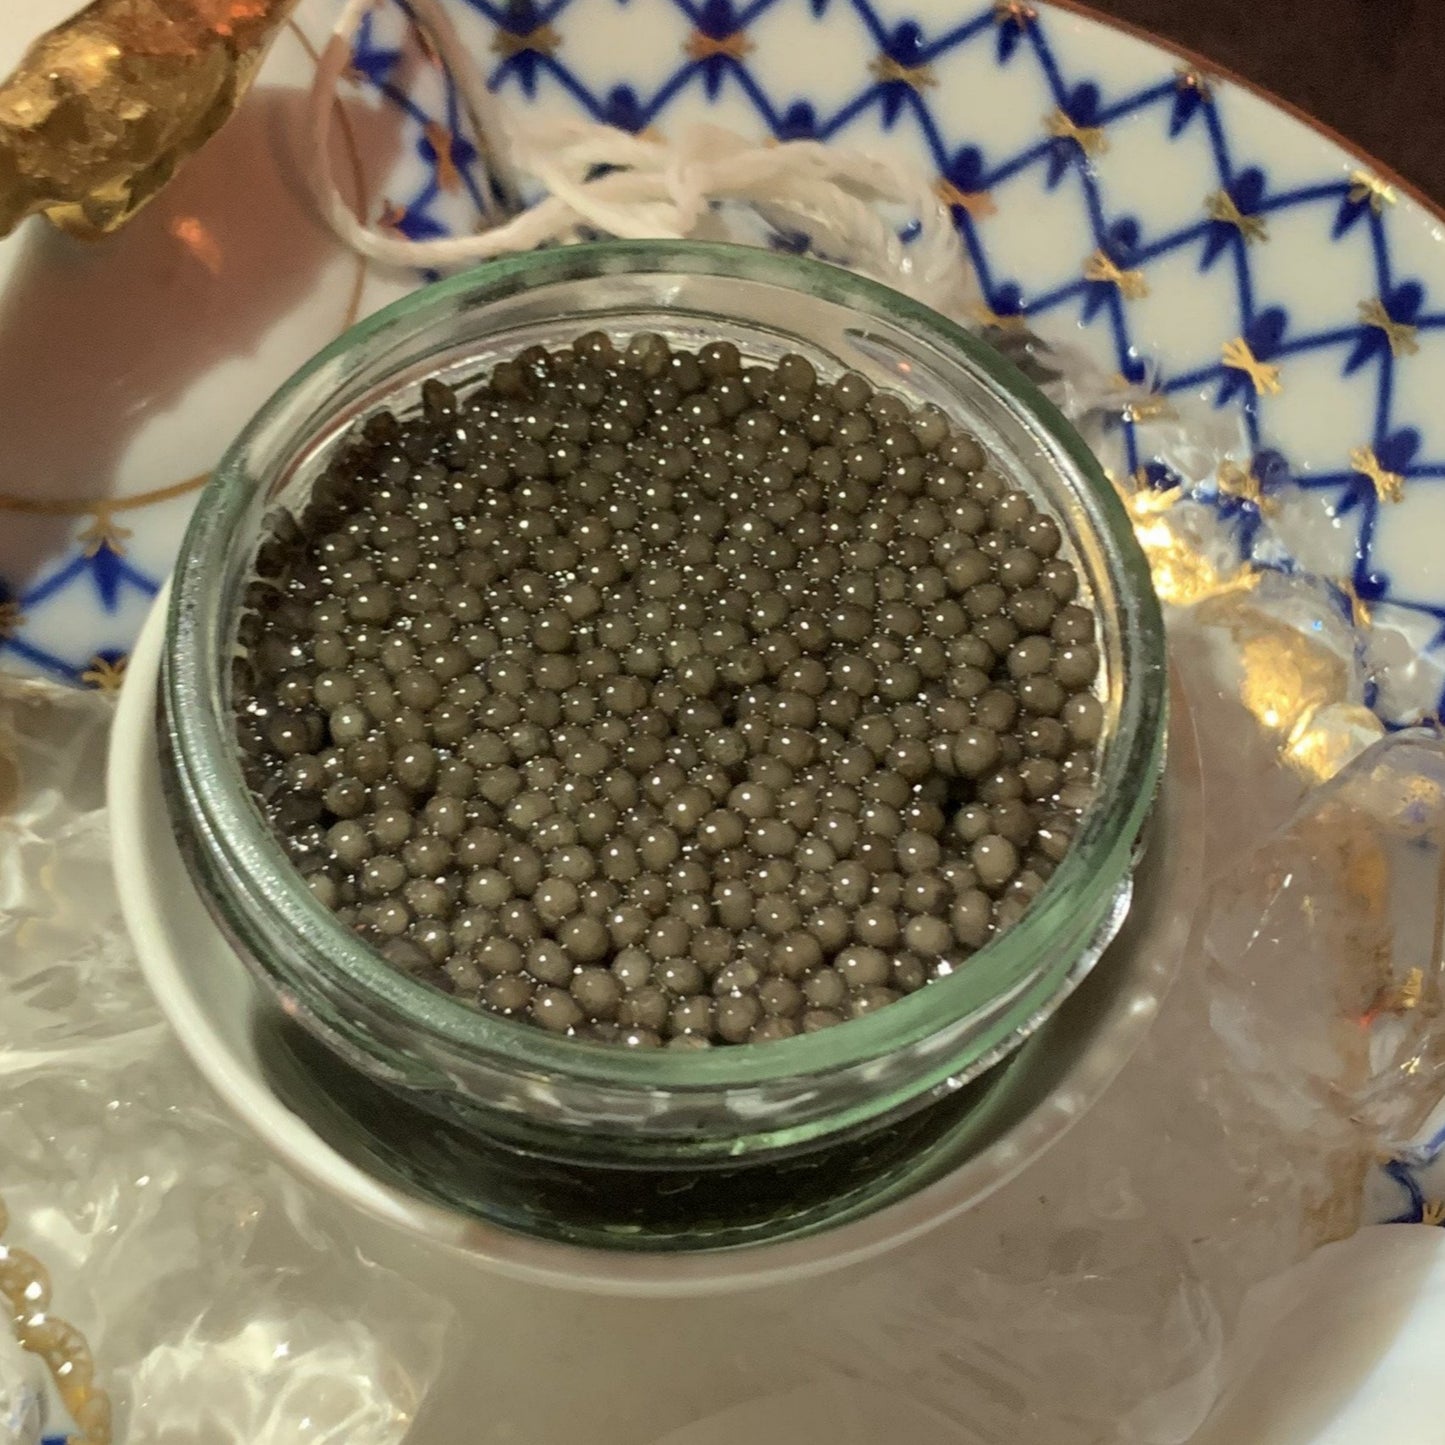 Iranian Imperial Beluga Caviar 50gm